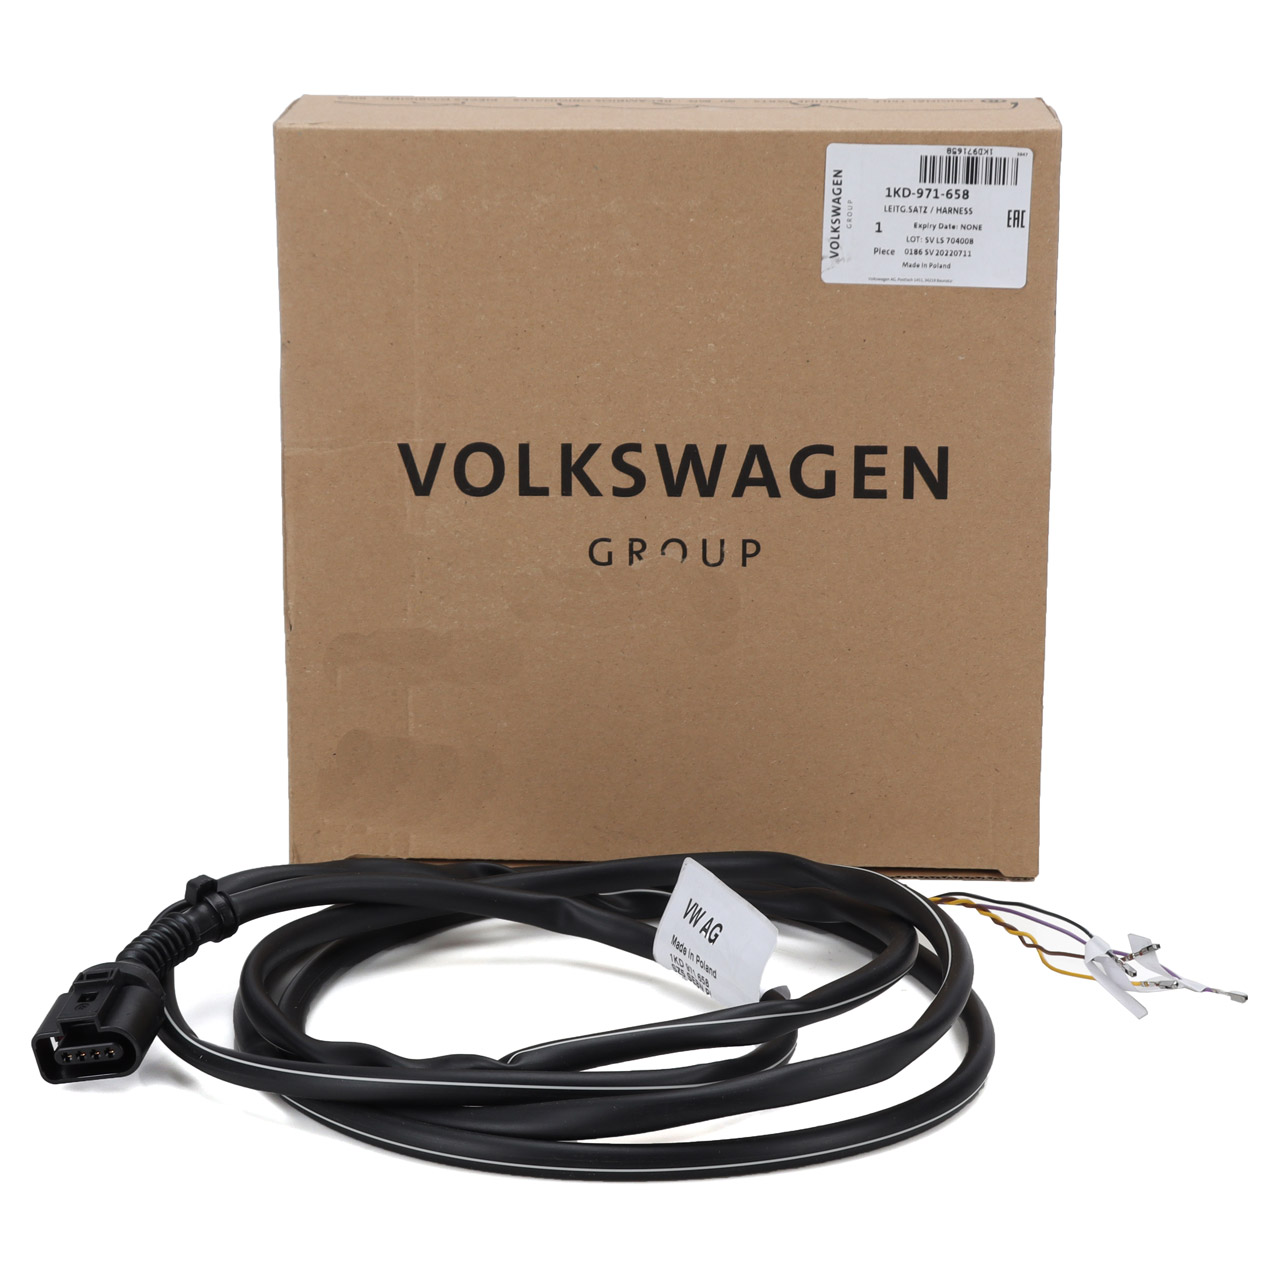 ORIGINAL VW Seat Skoda Adapter Leitung Rep.-Satz Temperaturfühler Golf 5 Passat 1KD971658